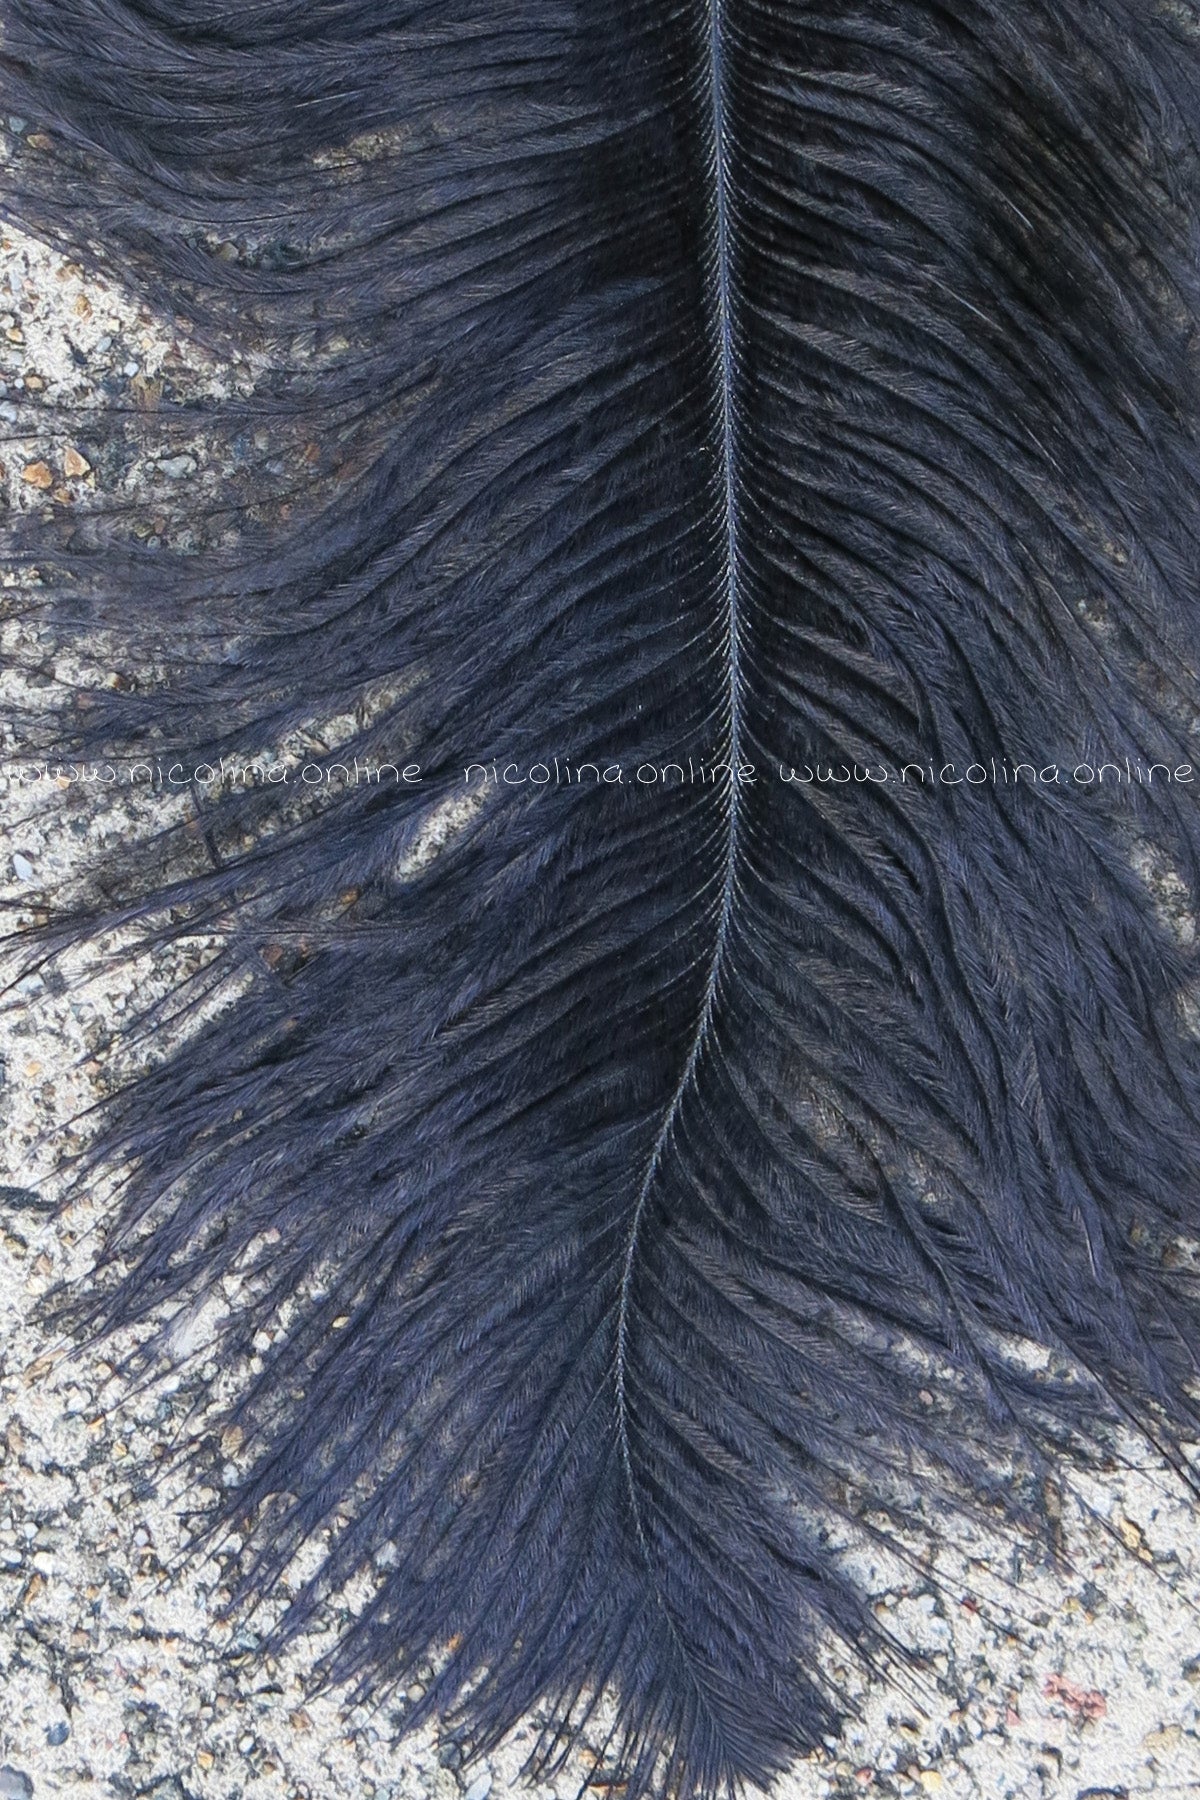 Ostrich Plume medium - Violet - feather plus